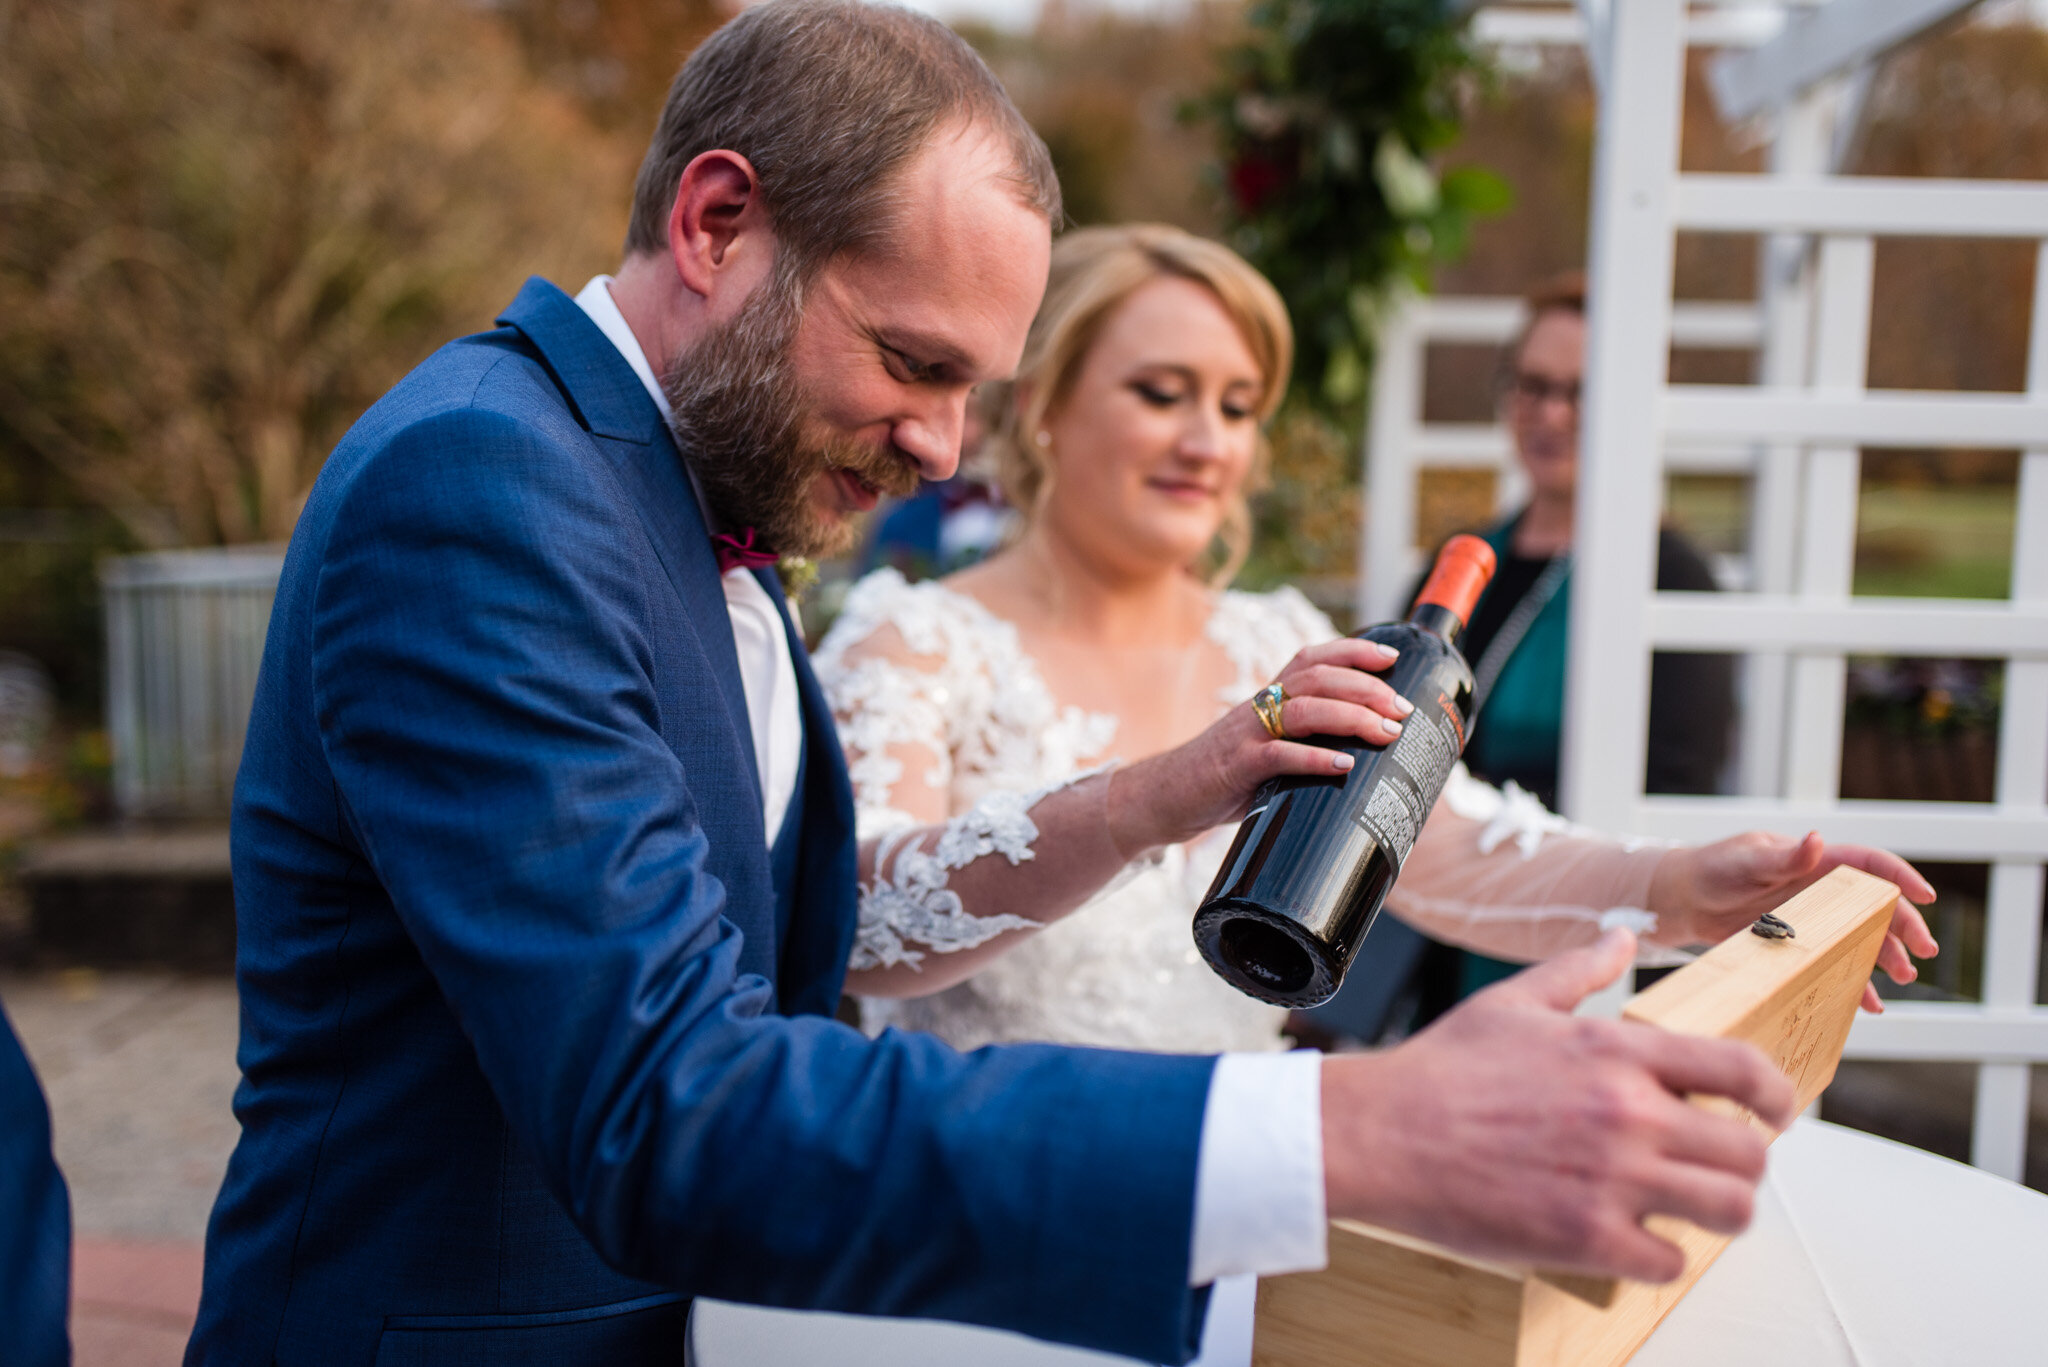 Wedding wine bottle ceremony